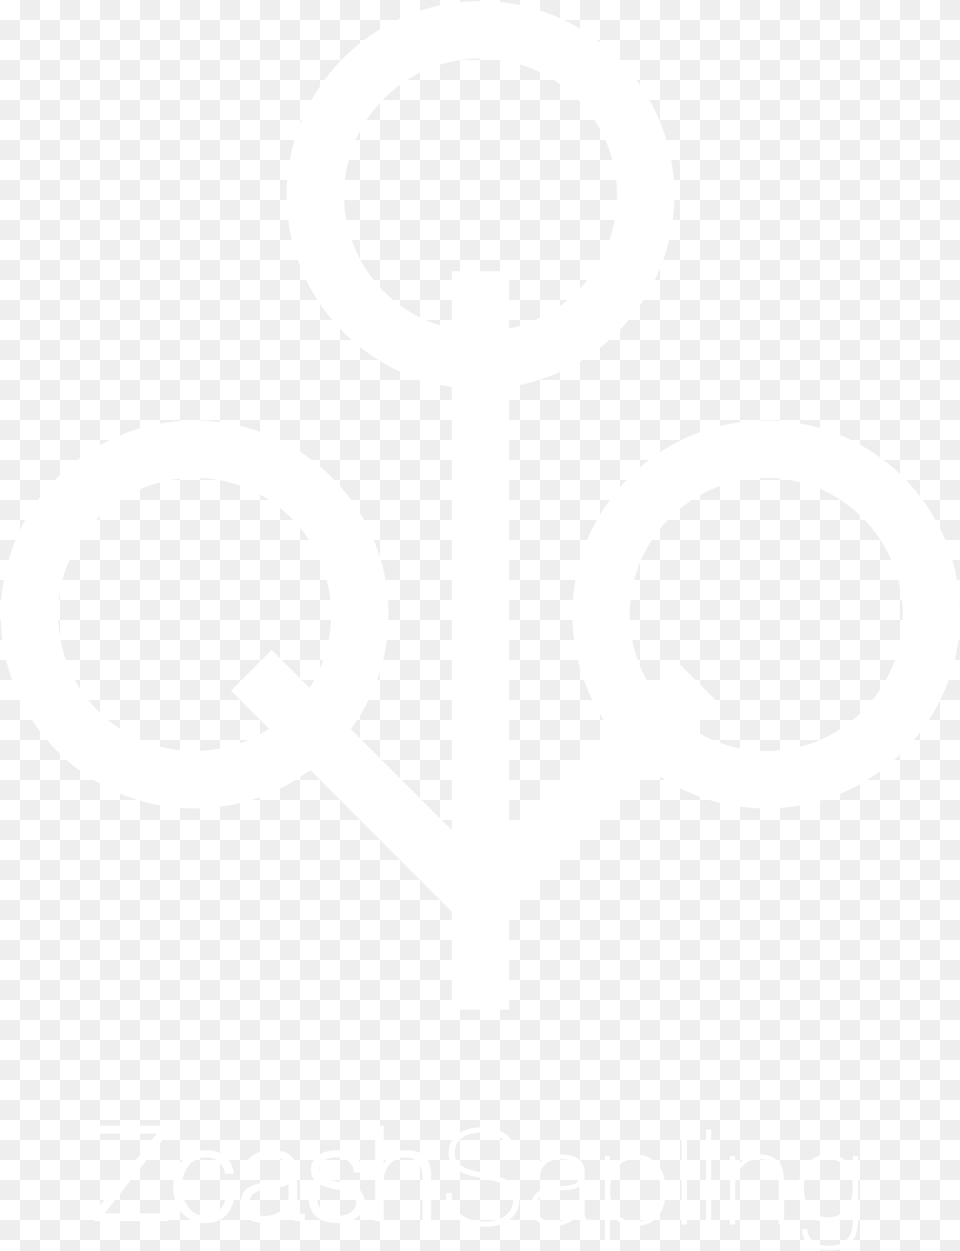 Zcash Media Kit Dot, Cross, Symbol Png Image